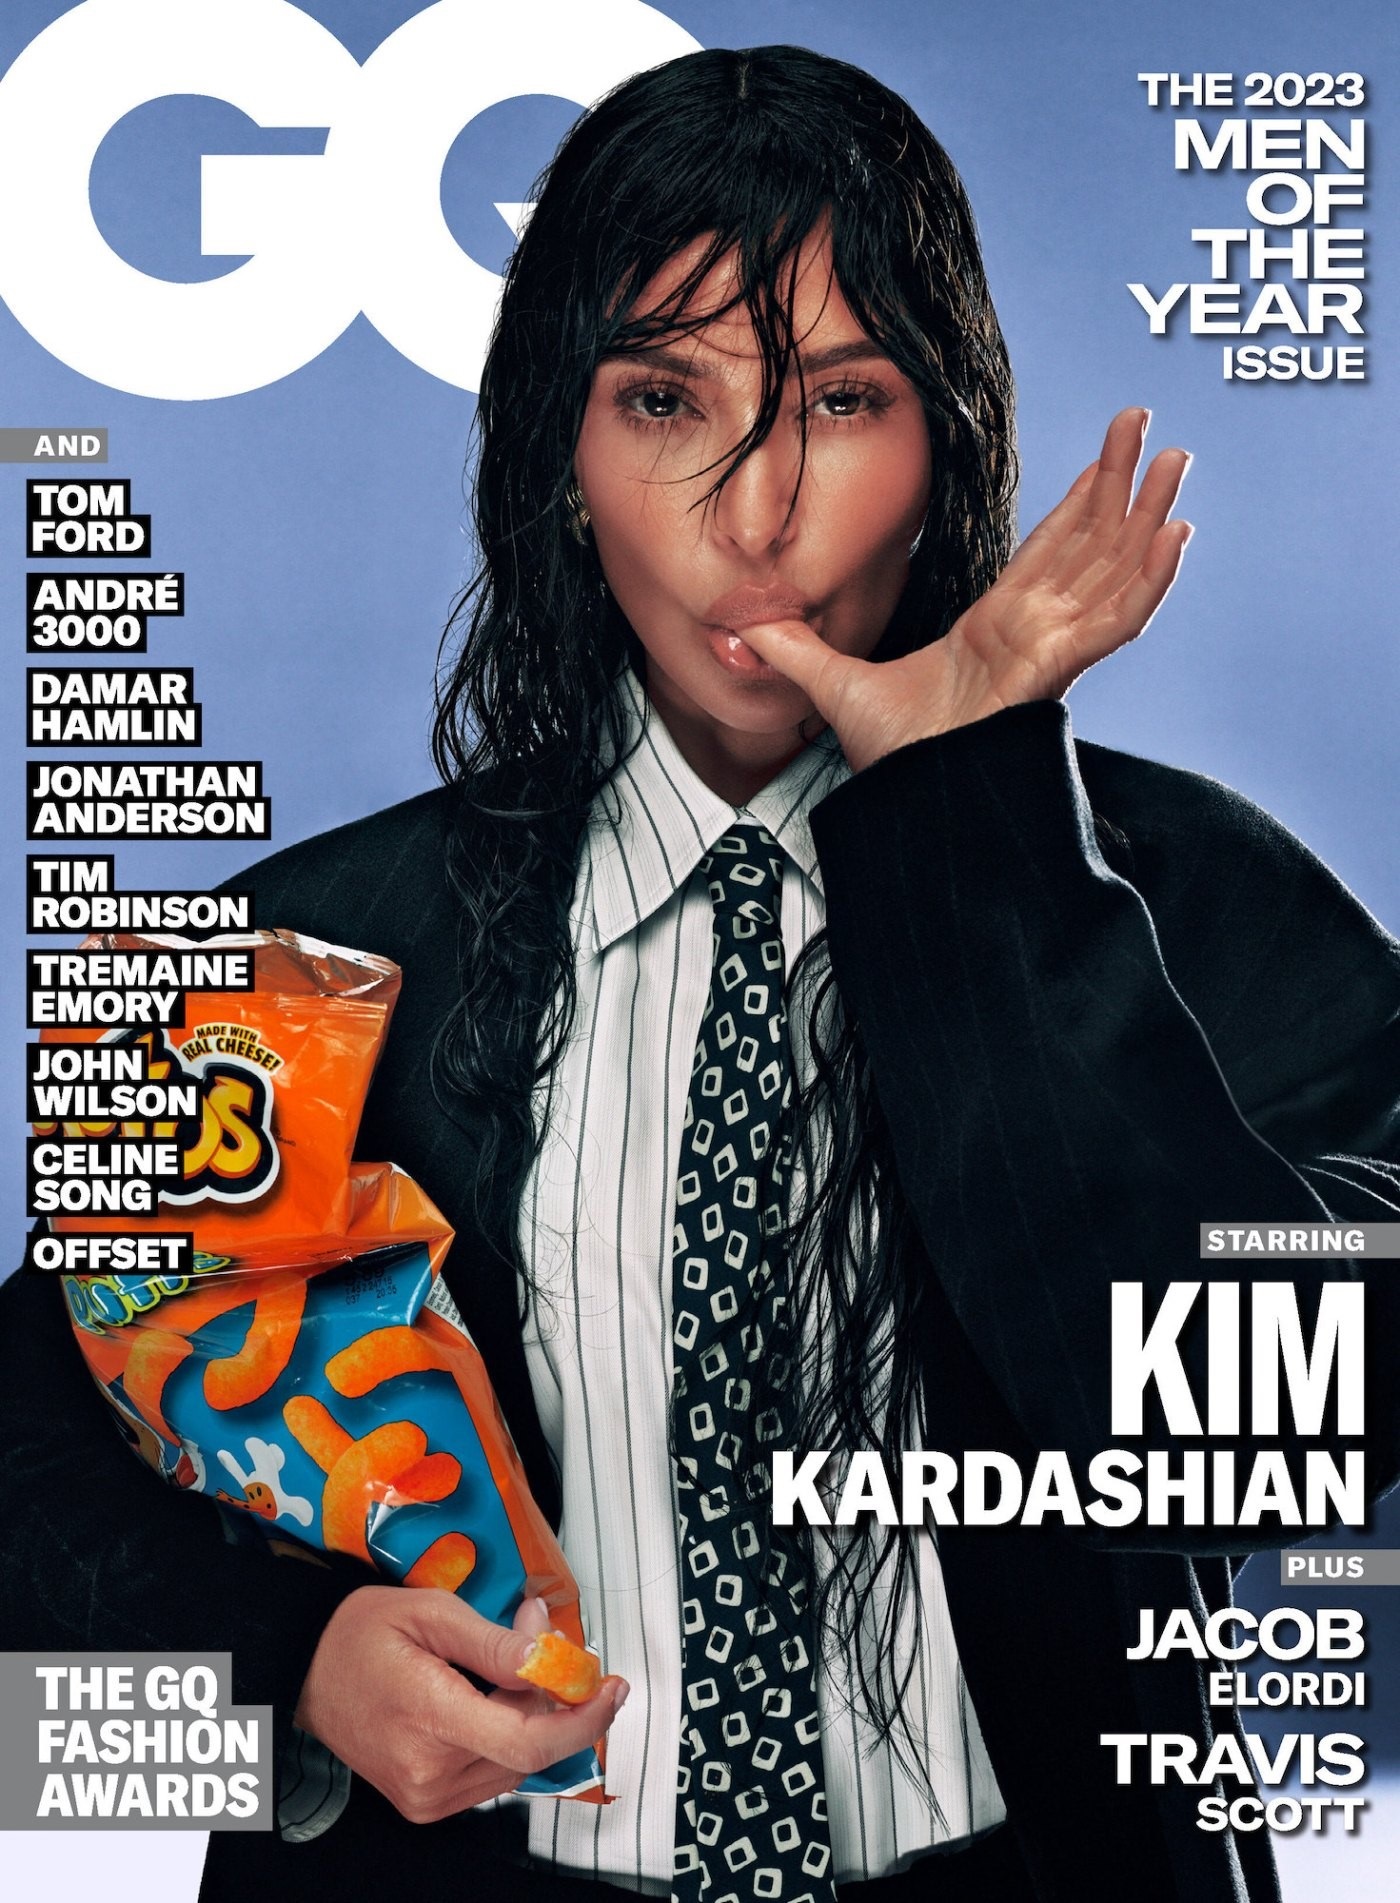 WATCH | Kim Kardashian graces cover of GQ as Man of the Year